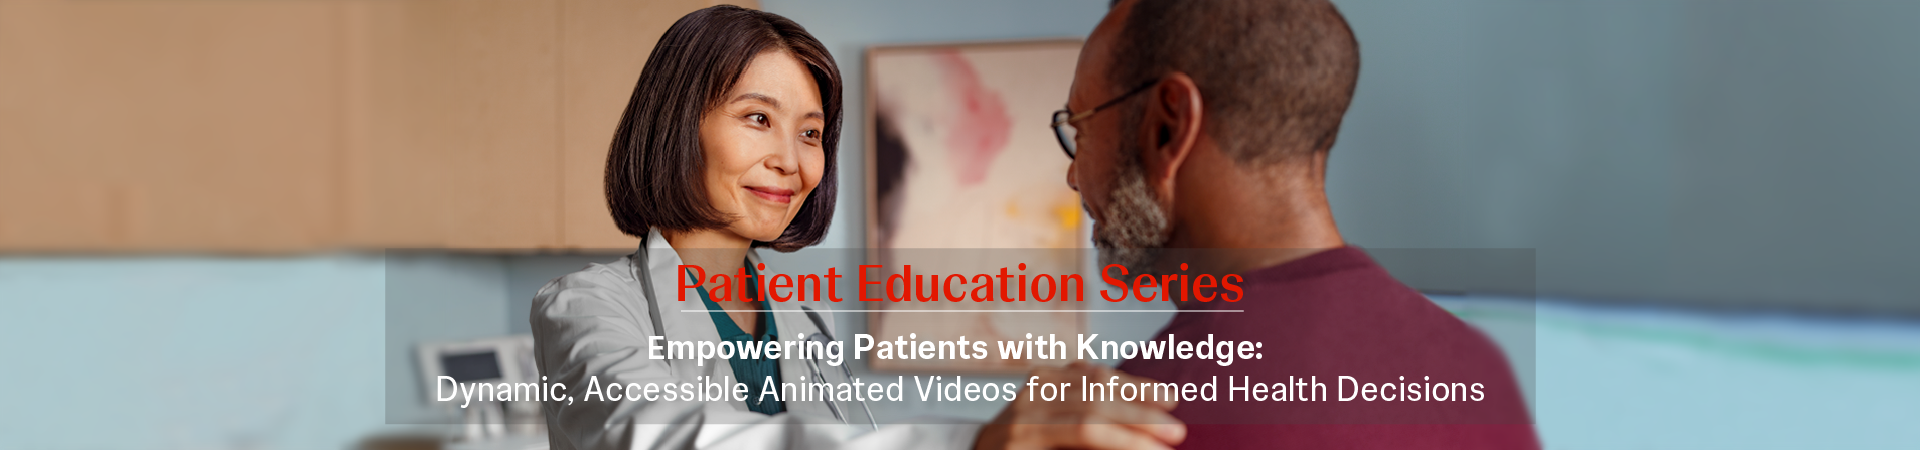 banner image Patient Education Series